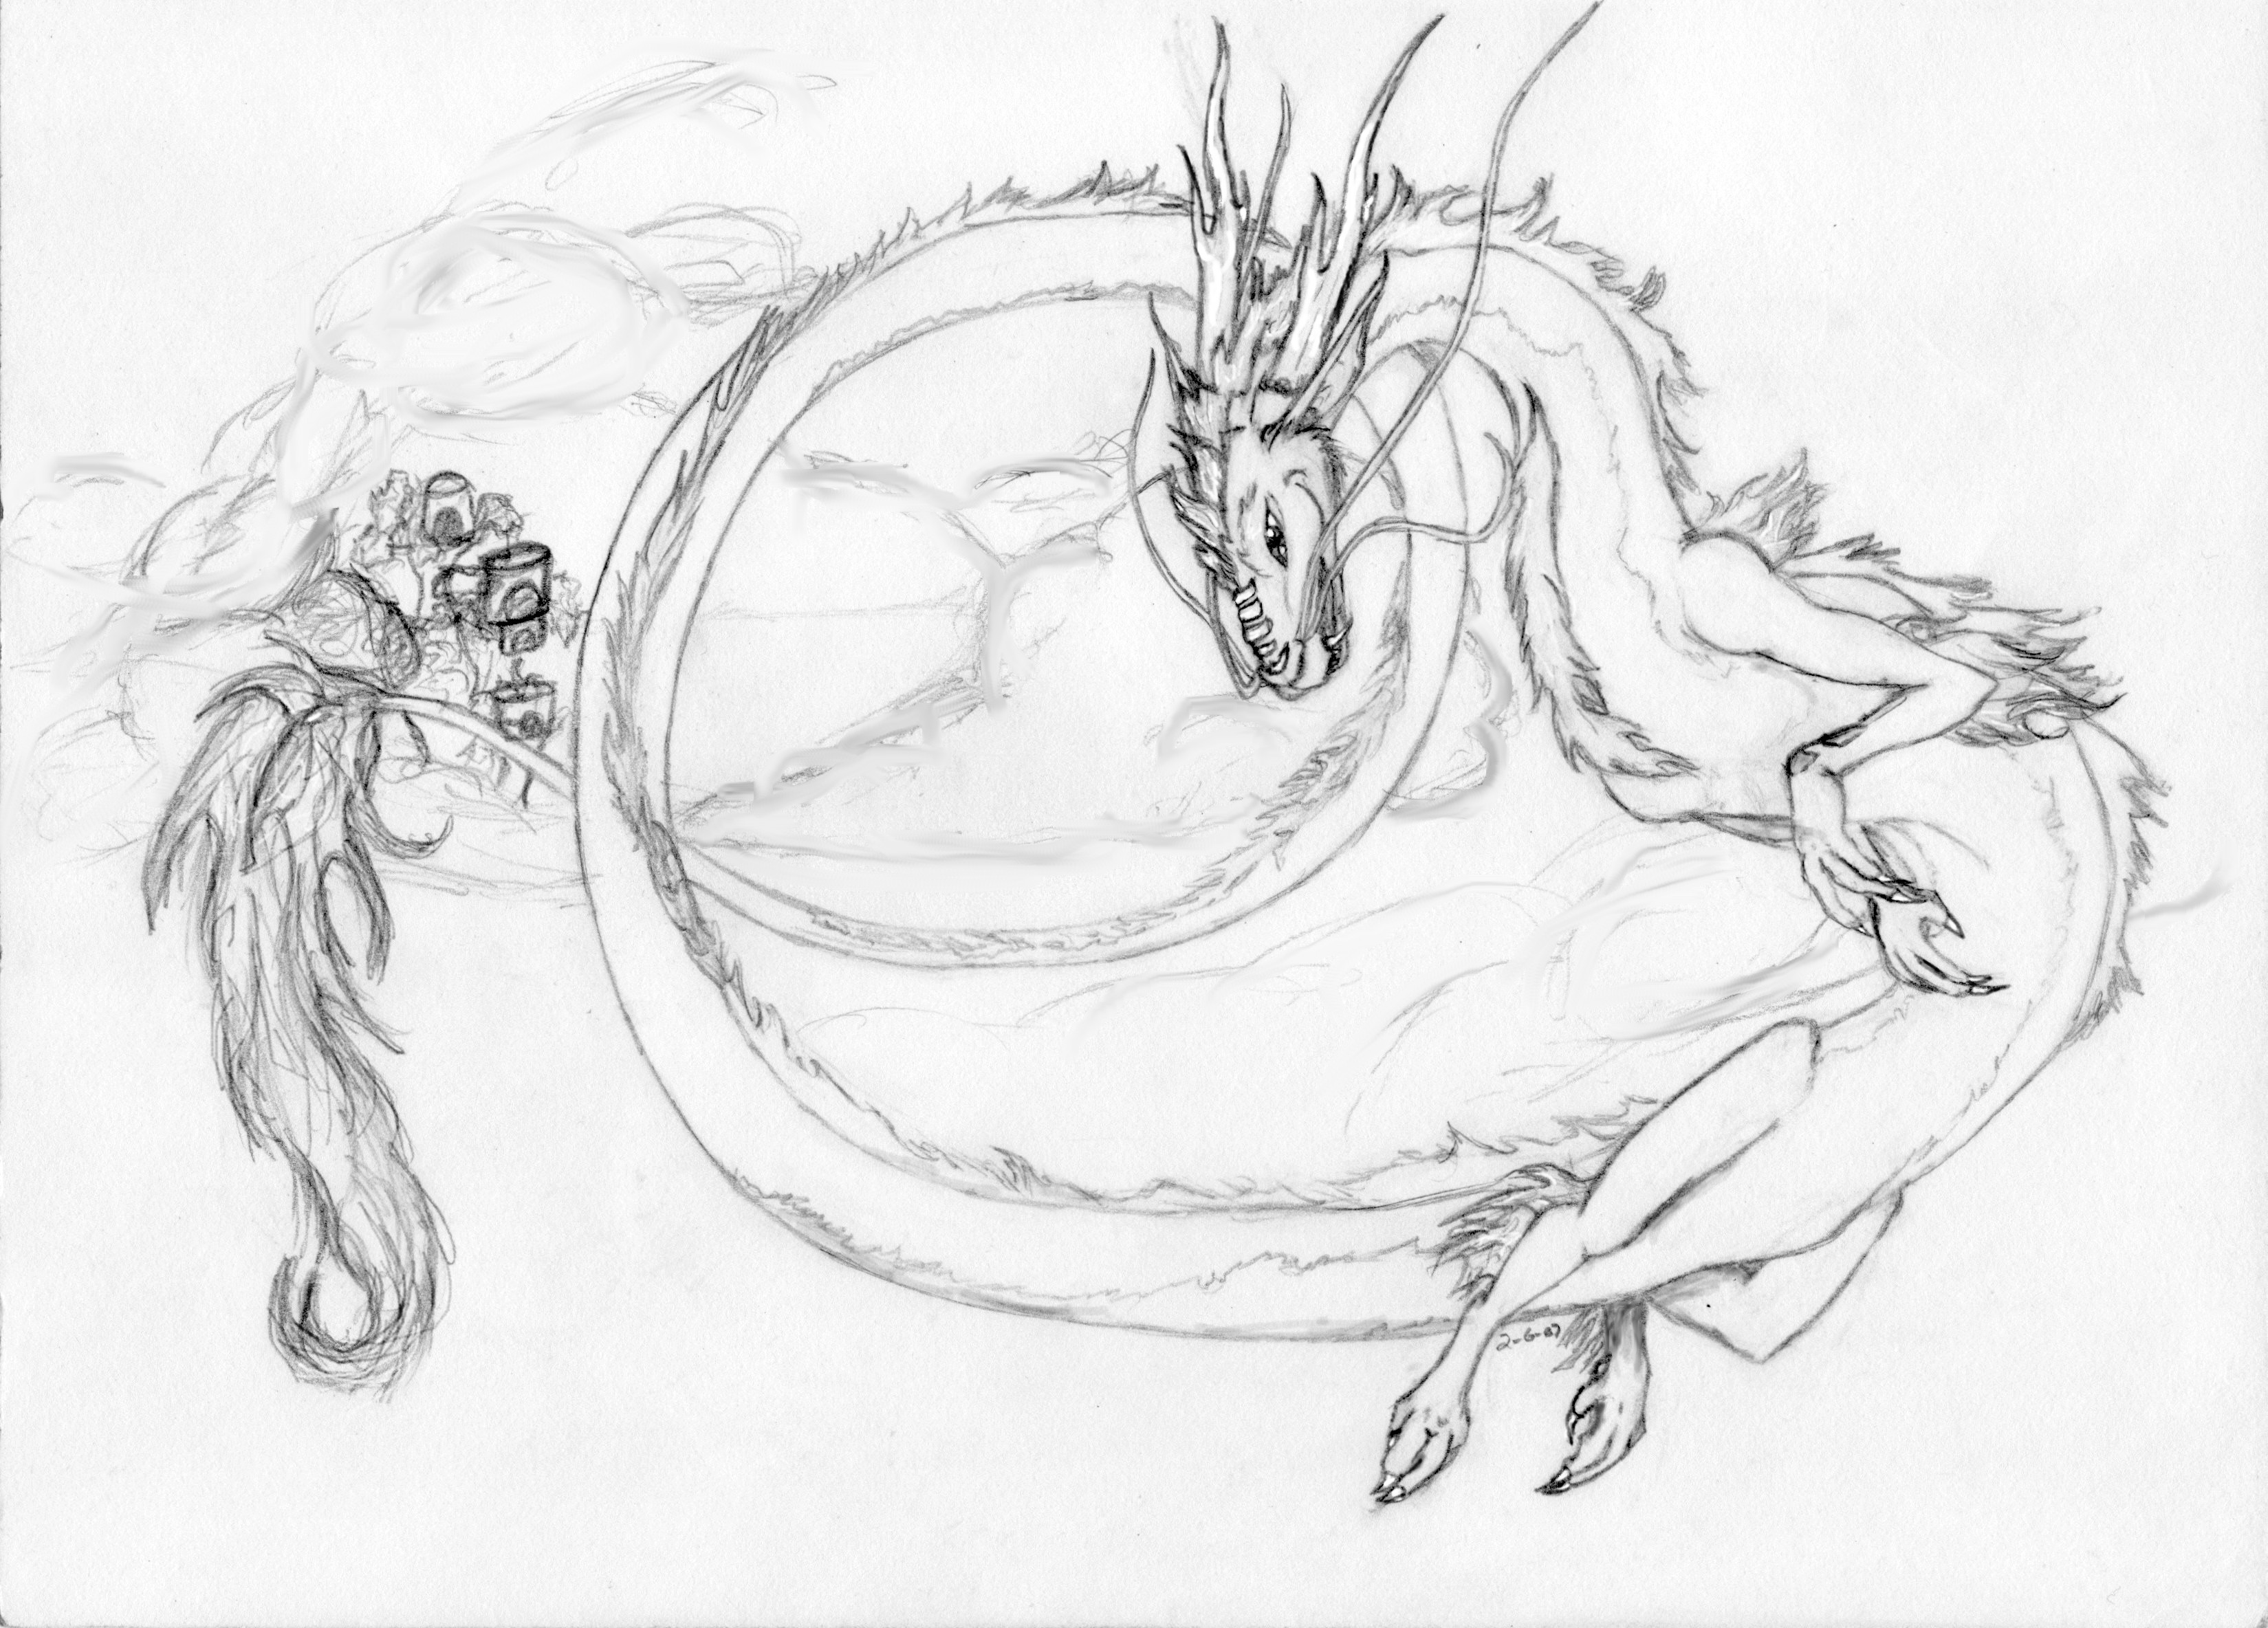 Gata the Dragon by GhostArt6